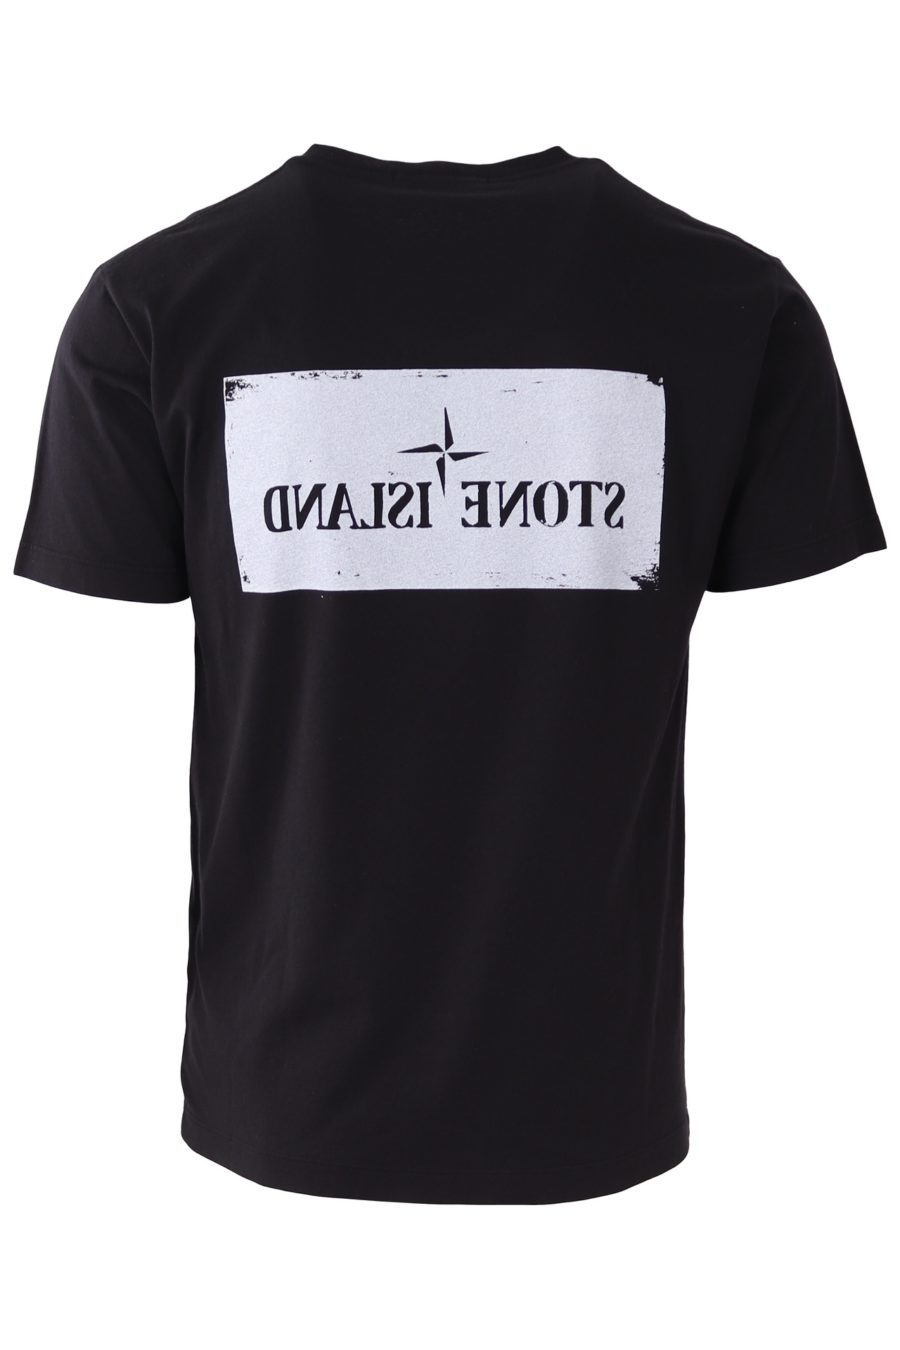 Camiseta Stone Island negra con logo blanco - 20fce227f32cea2662c3f742b2e9d3e5e3c43d7b